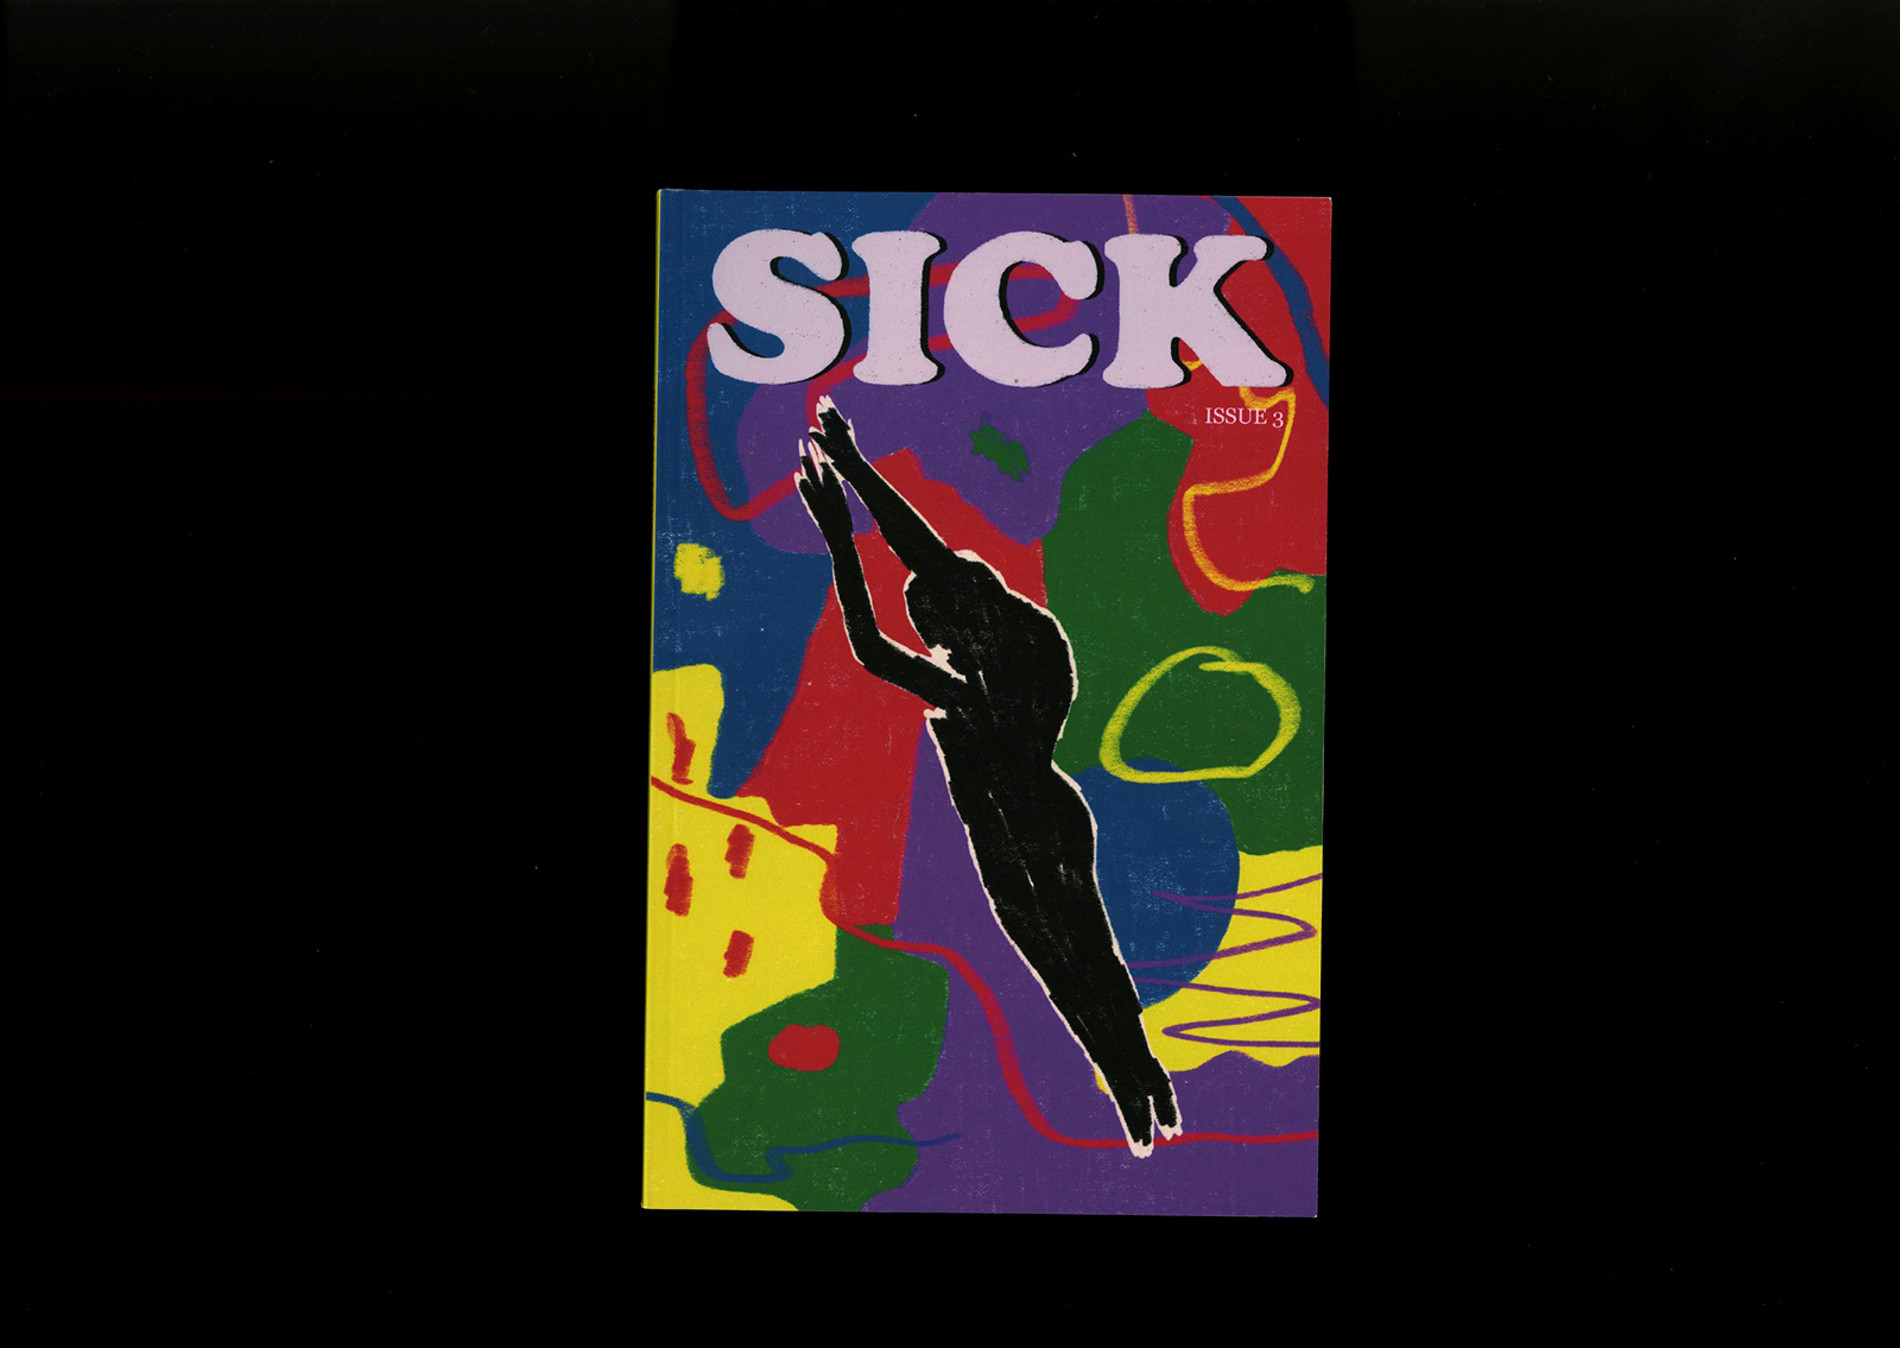 SICK SICK: Issue 3